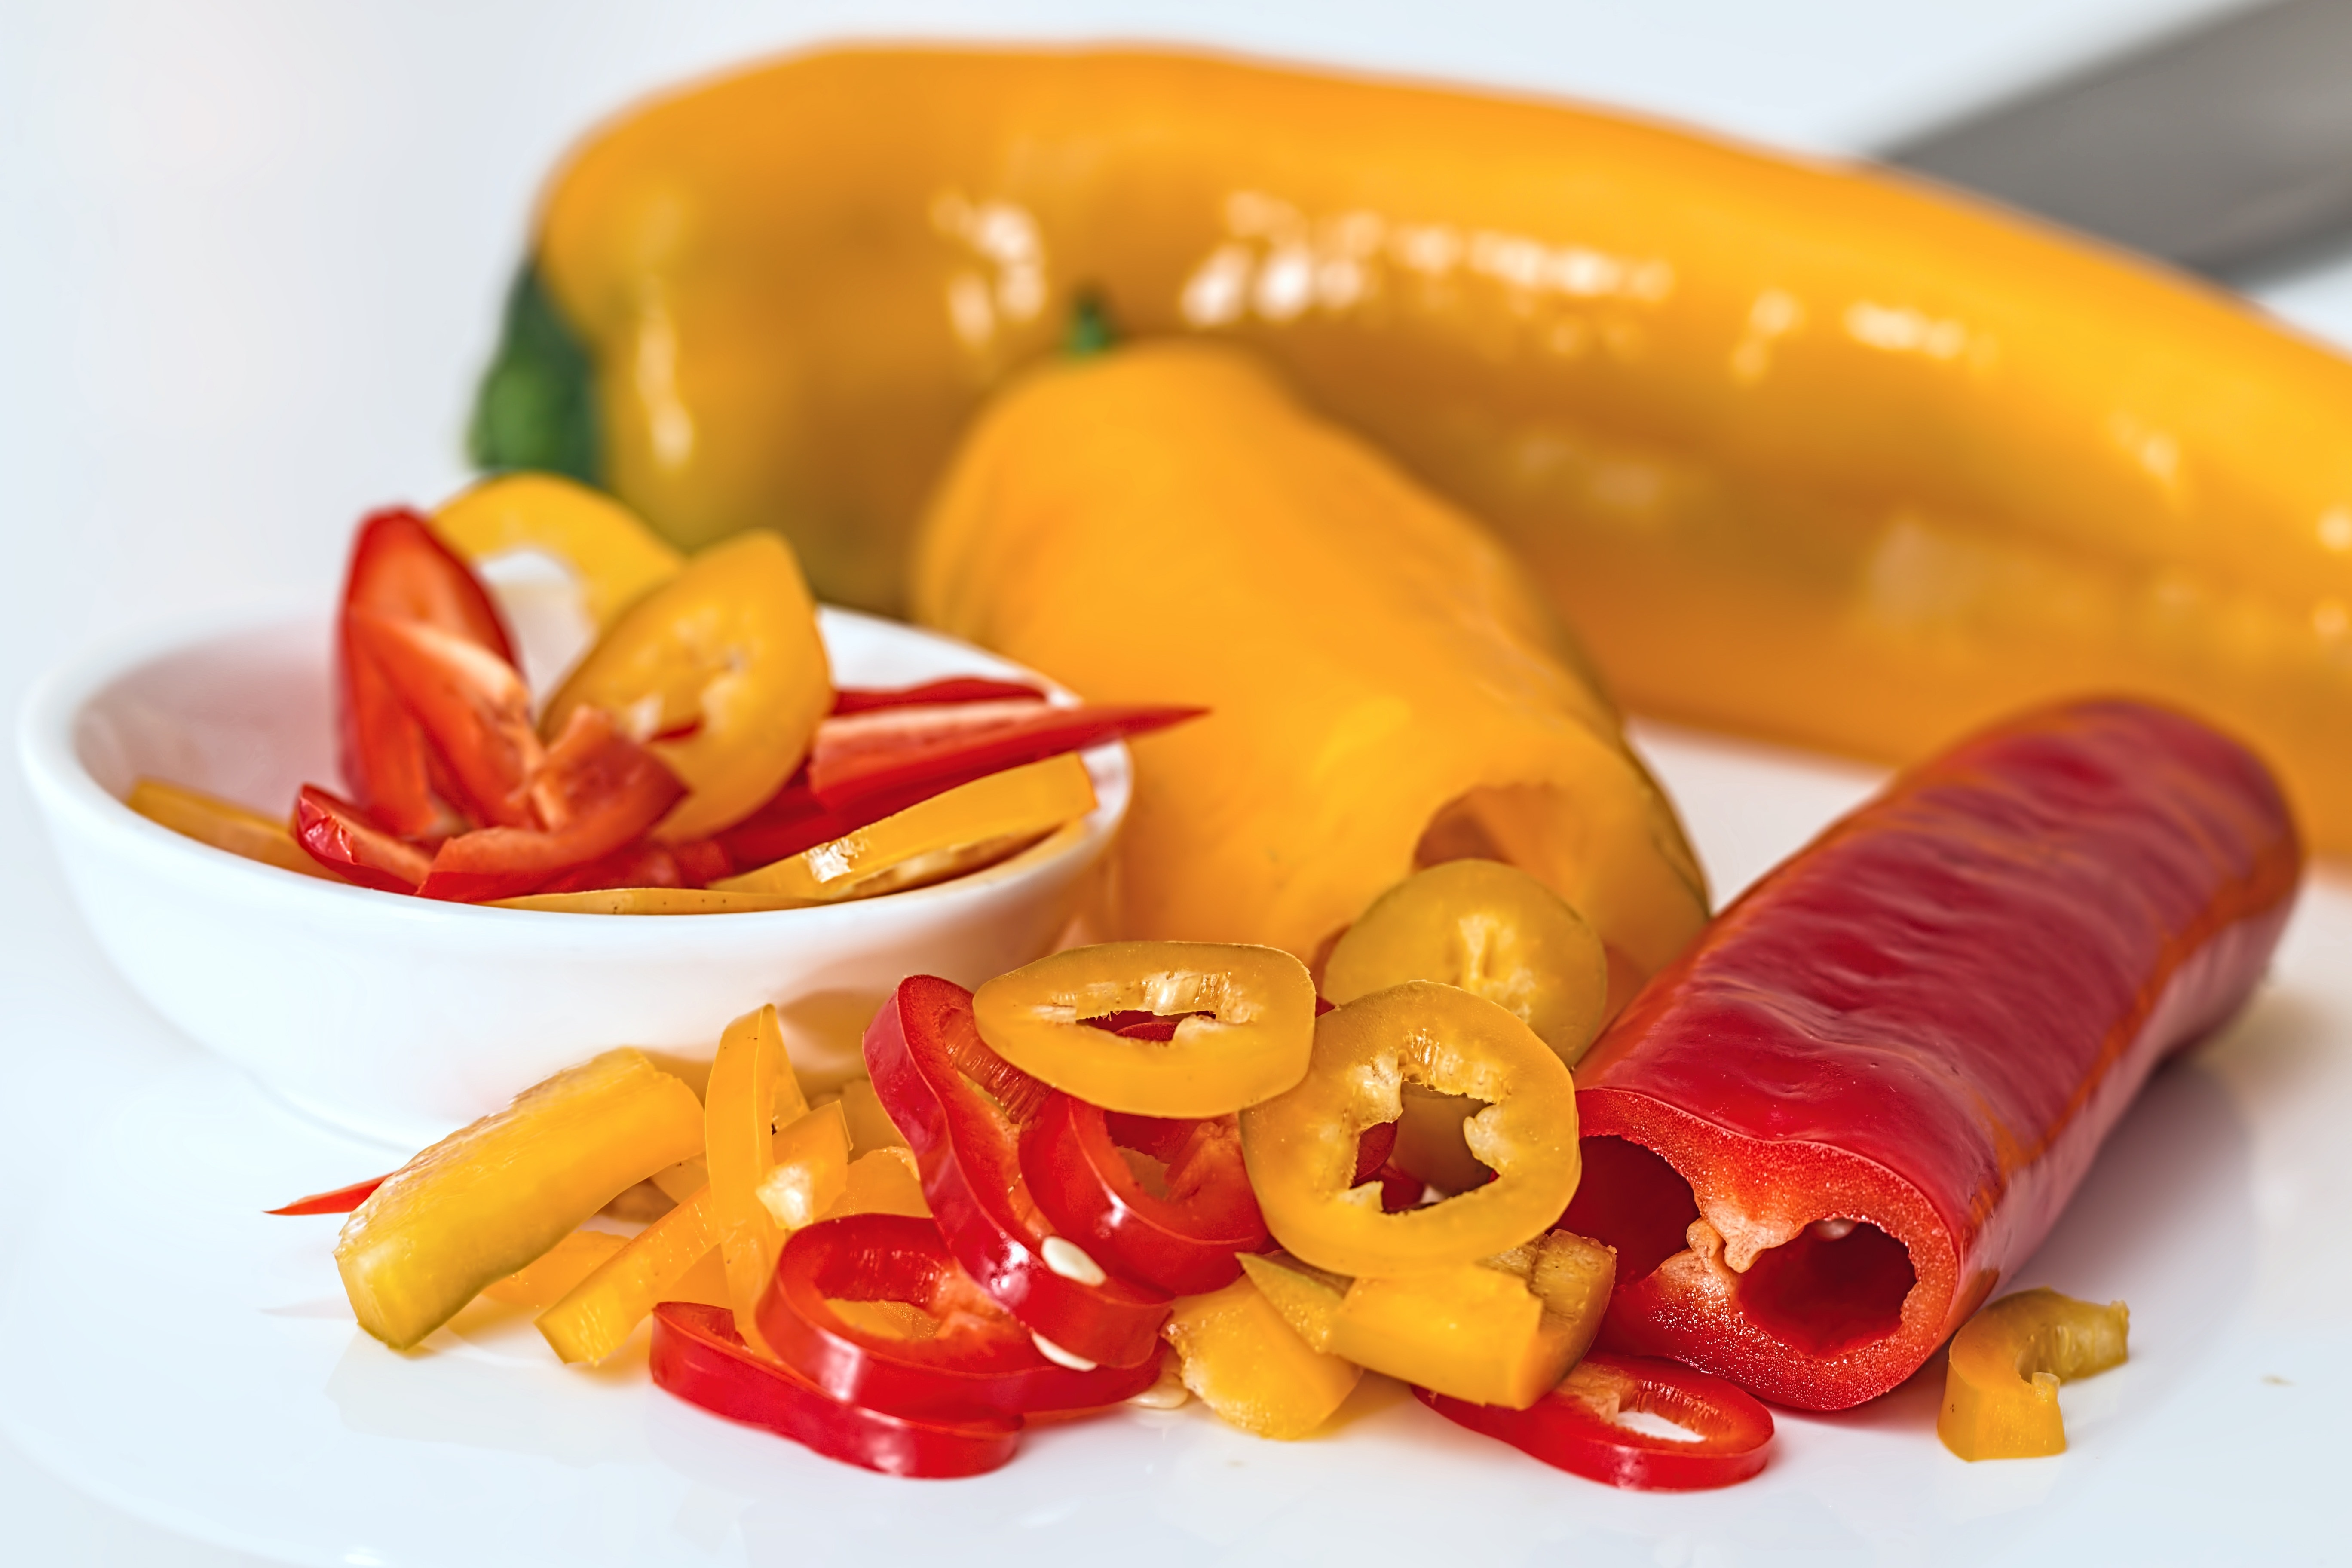 red and yellow chili